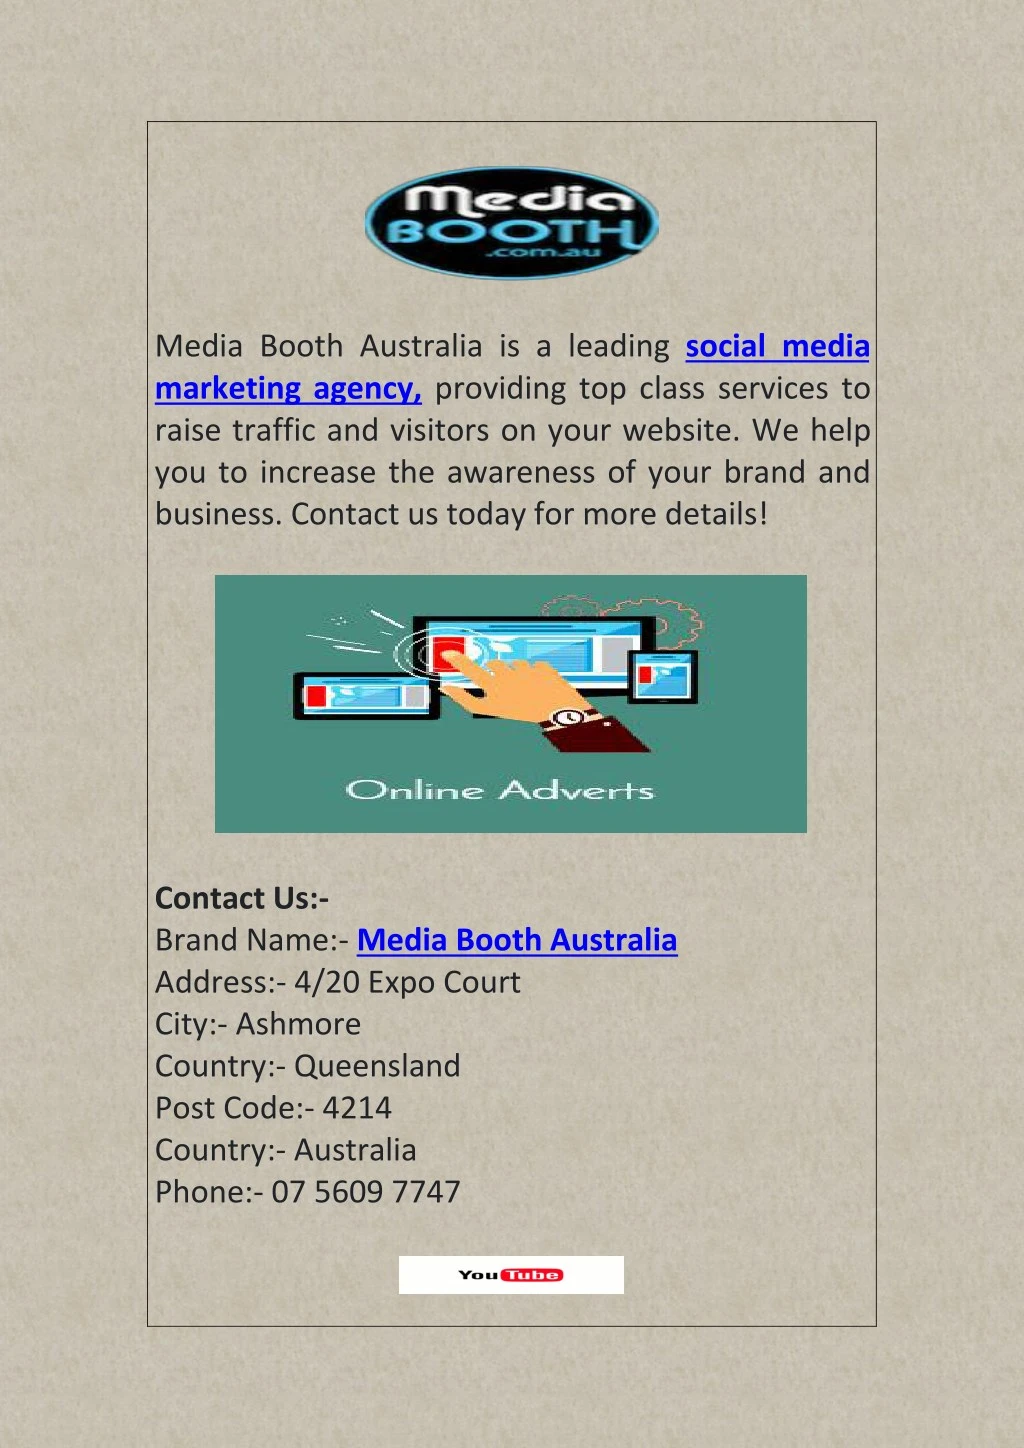 media booth australia is a leading social media